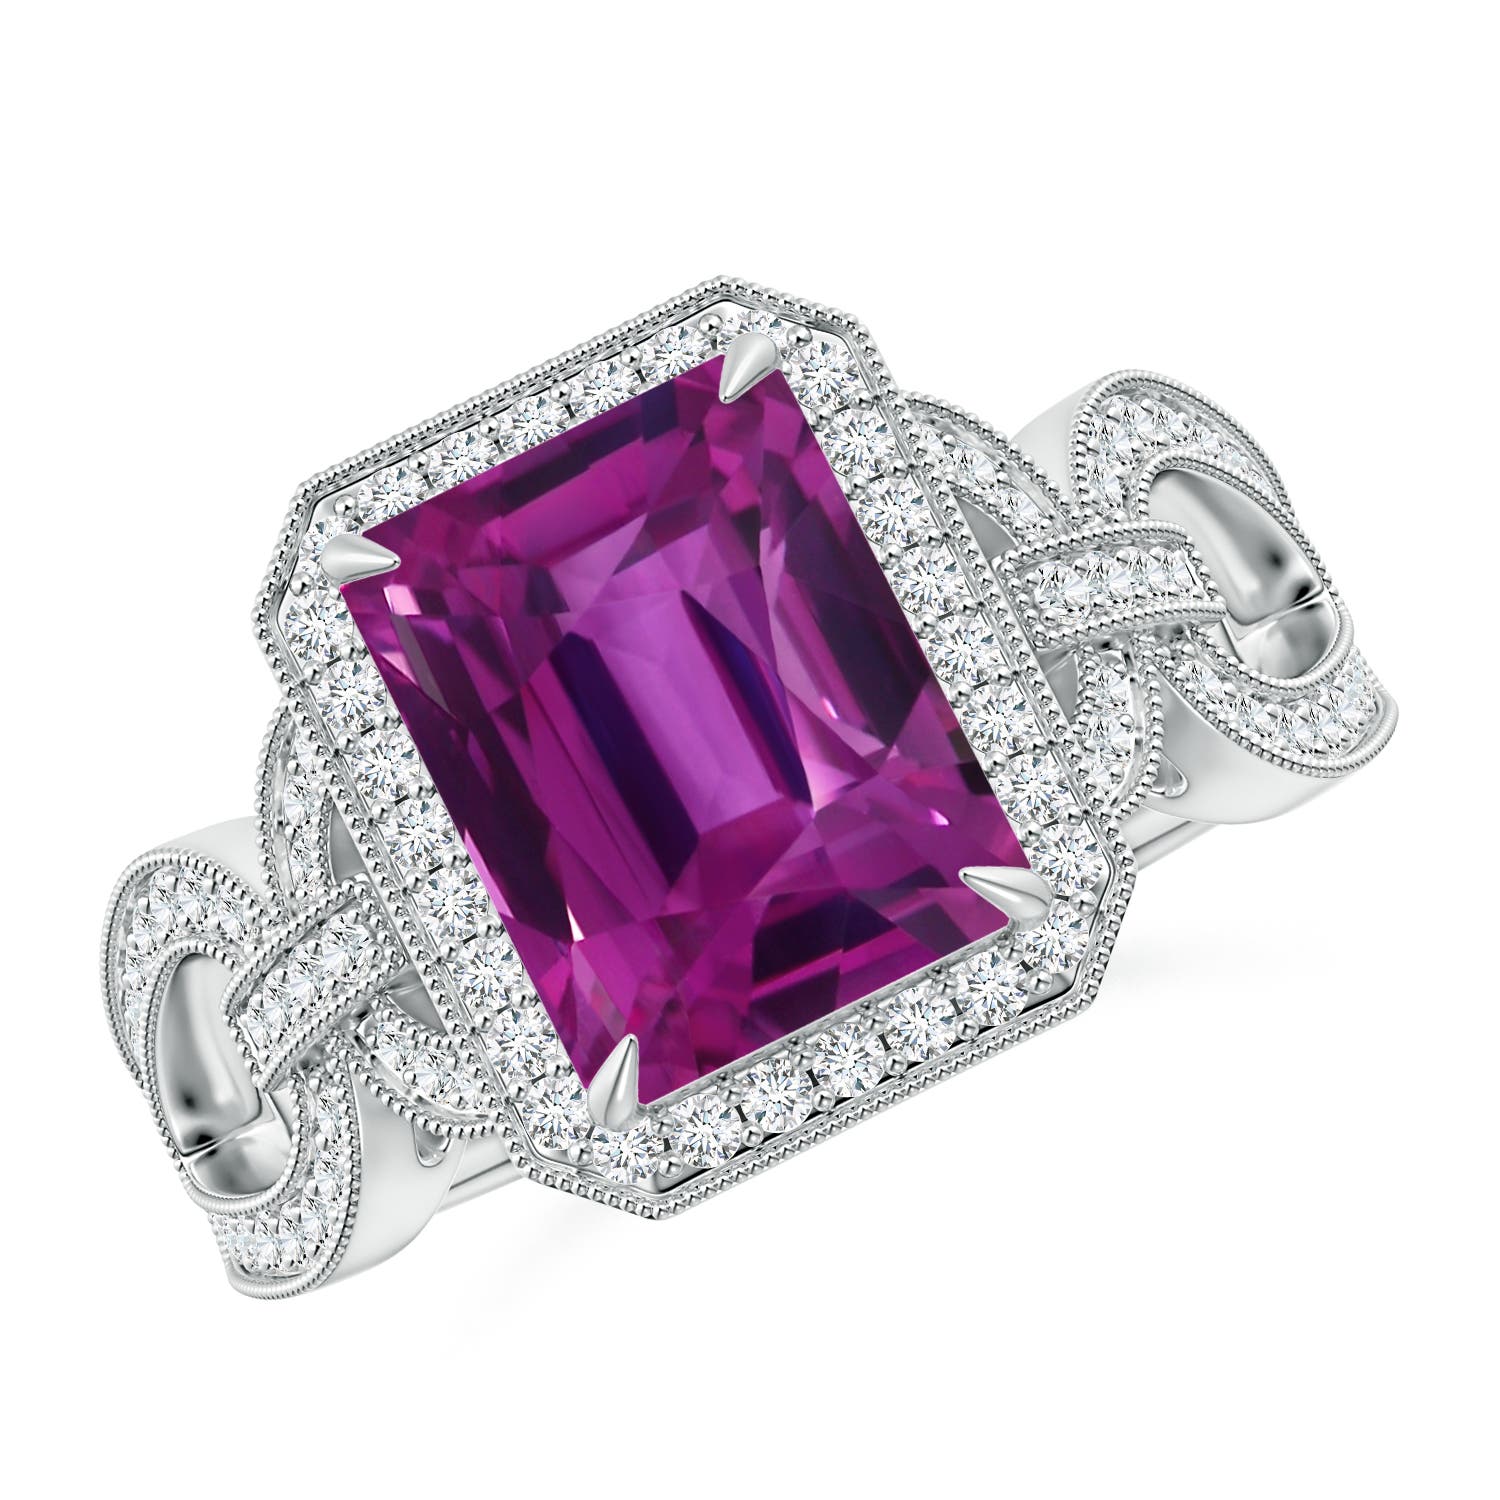 Gia certified emerald cut pink sapphire with diamond halo angara sapphire ring